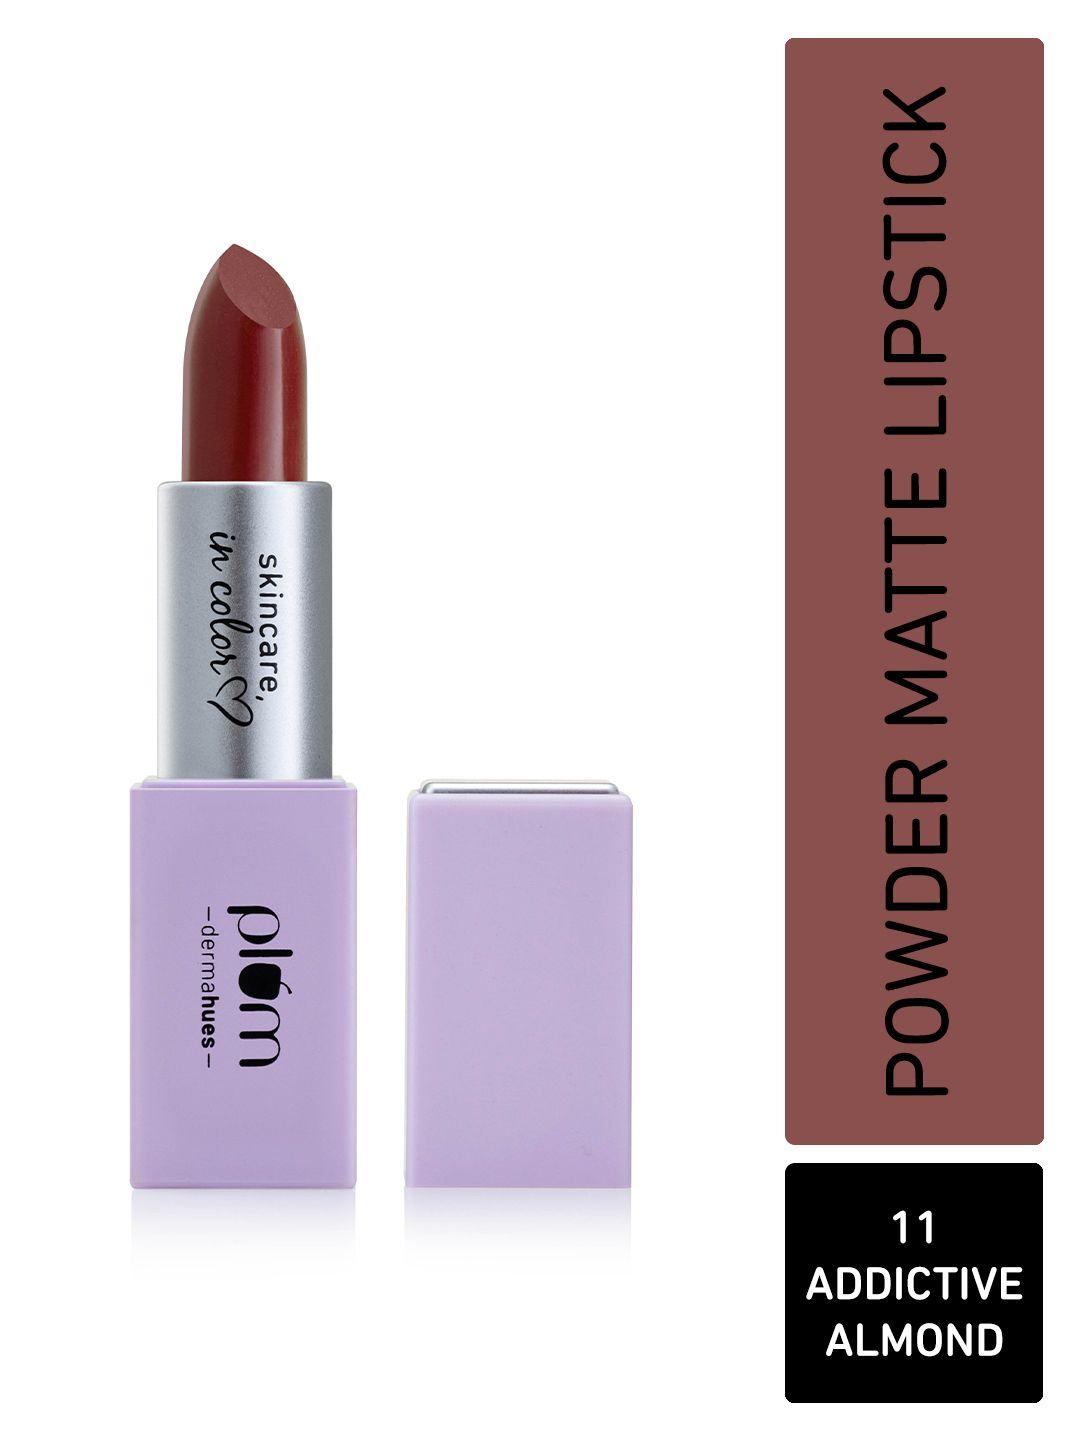 plum velvet haze power matte bullet lipstick with spf 30 - 4.2g - addictive almond 11